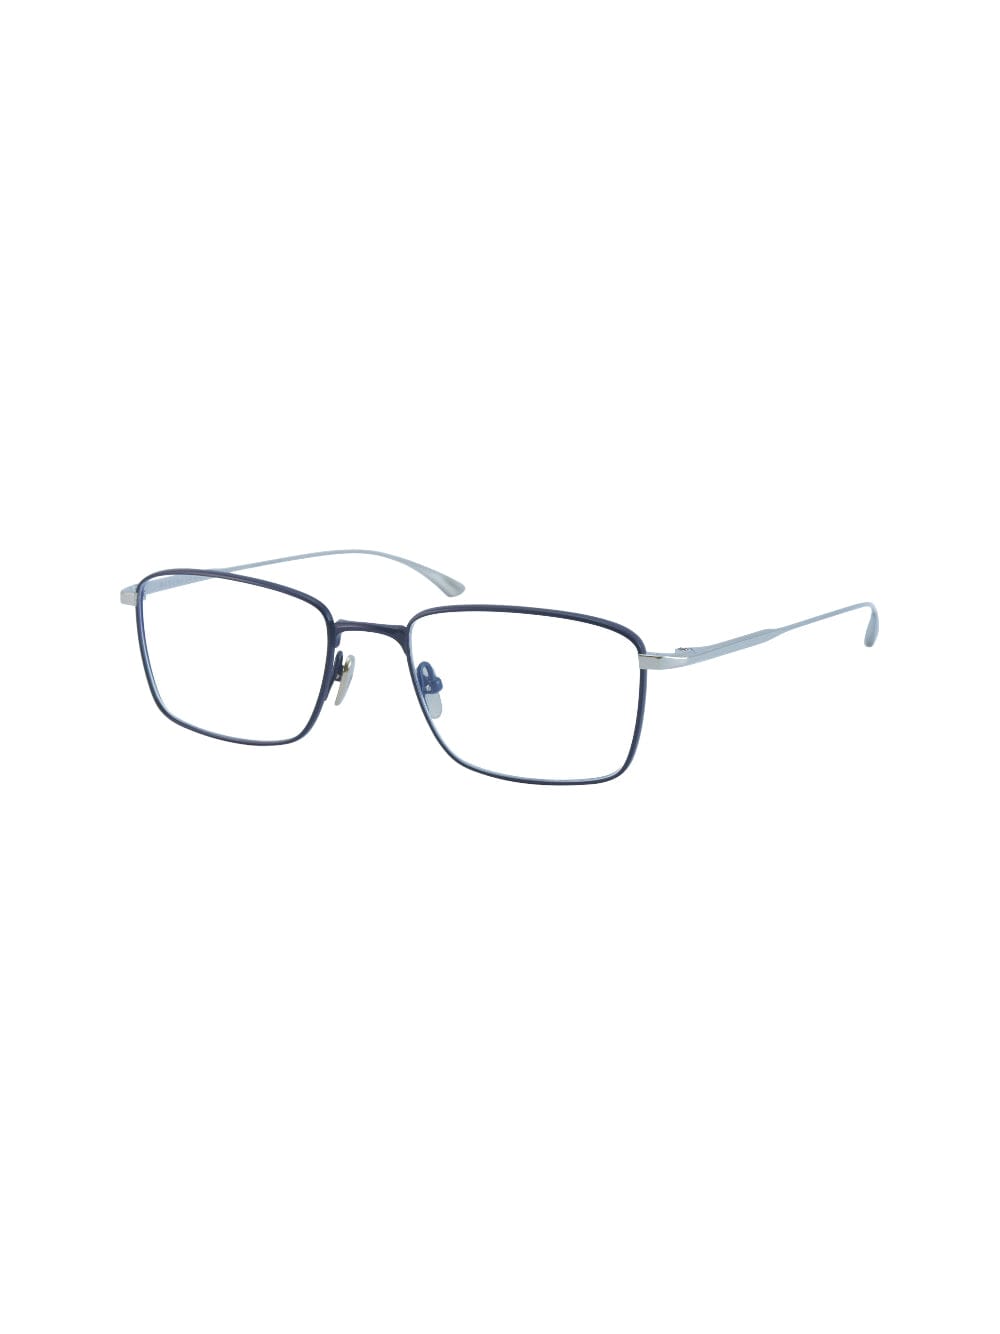 Masunaga Lex - Blue & Satin Silver Glasses